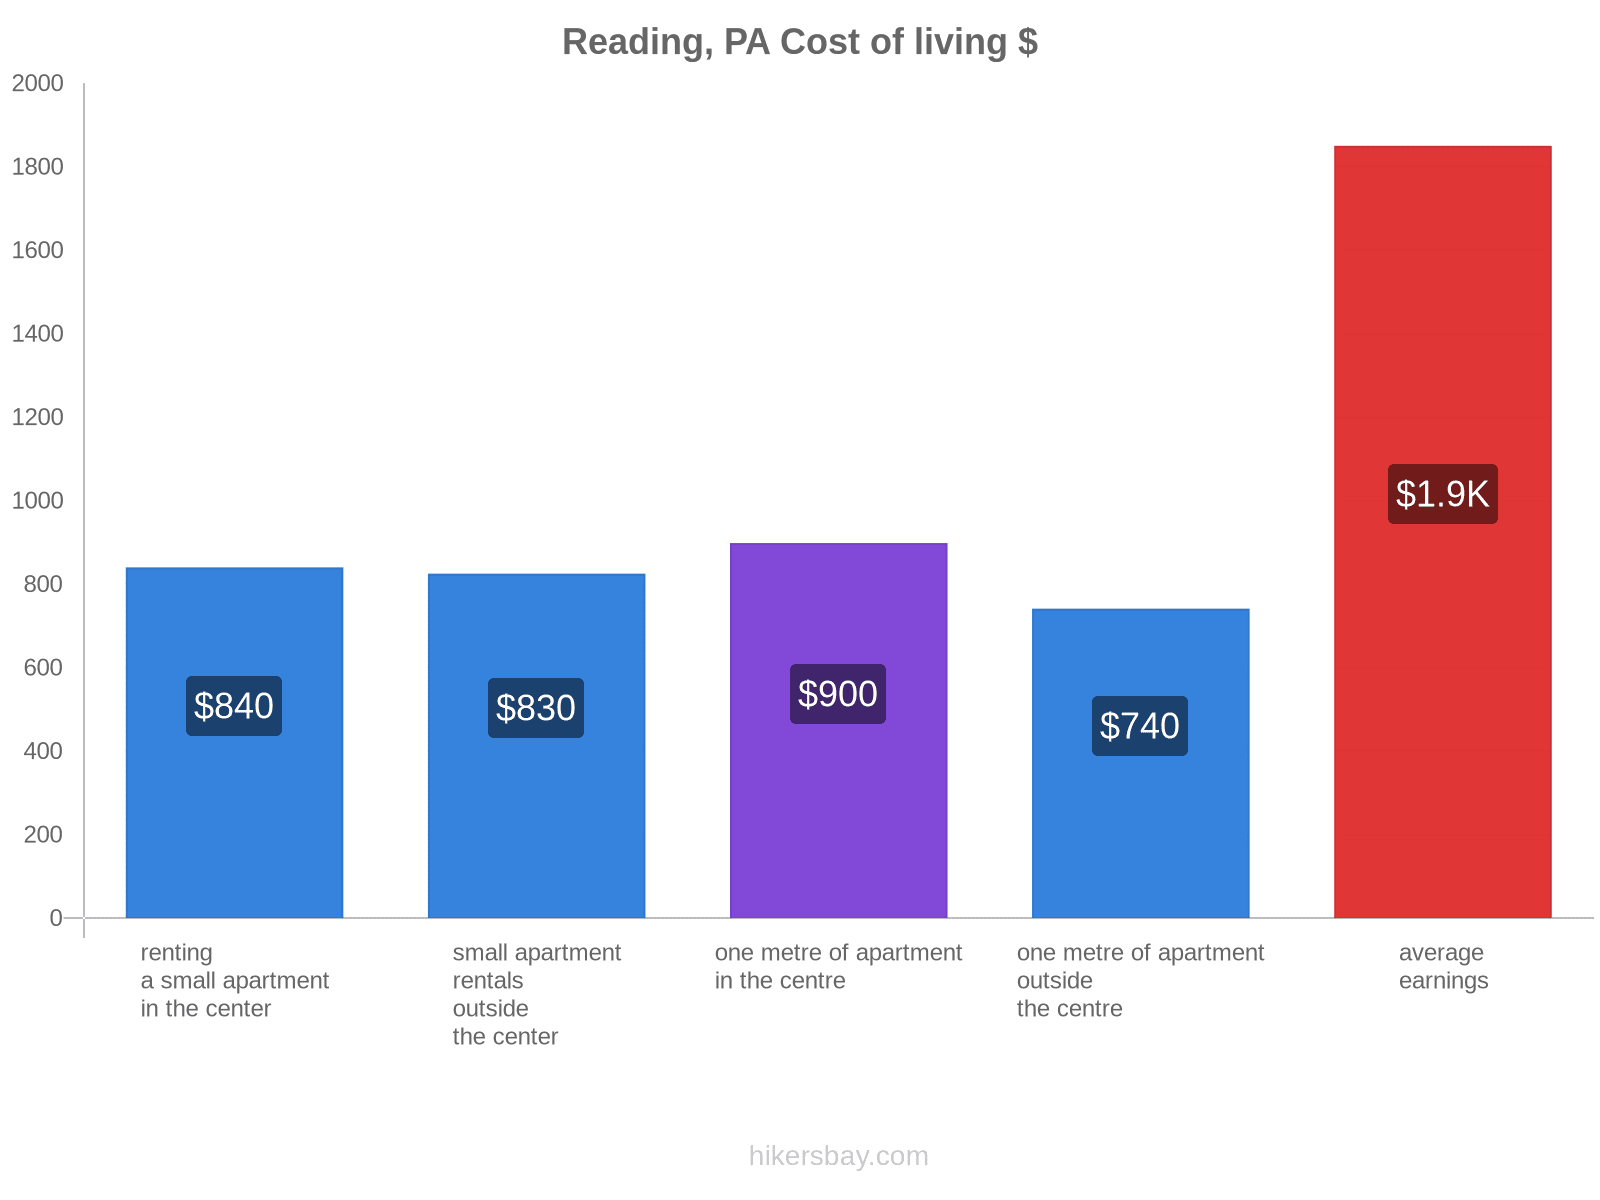 Reading, PA cost of living hikersbay.com